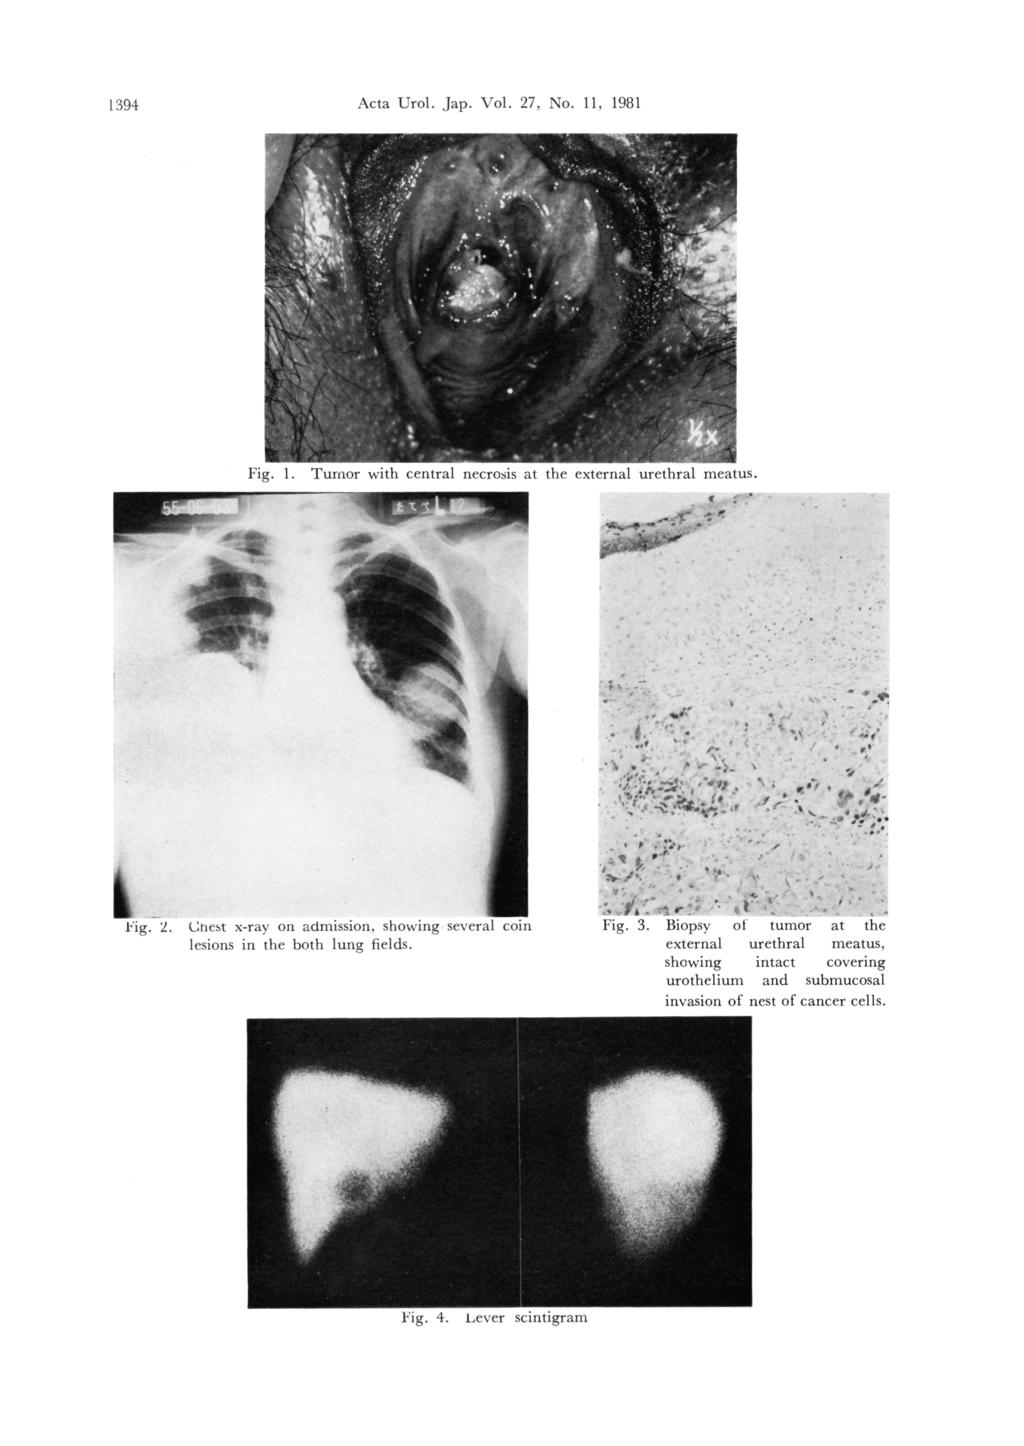 Acta Tirol. 1394 Jap. Vol. 27. No. 11. 1981.- v / 6. ` ` rt. f 4-. l r1~, 1. Tumor with central necrosis at external tt meatus. I ha * M! ~ m r~~a r. _. s,i(.t ~! - 2.